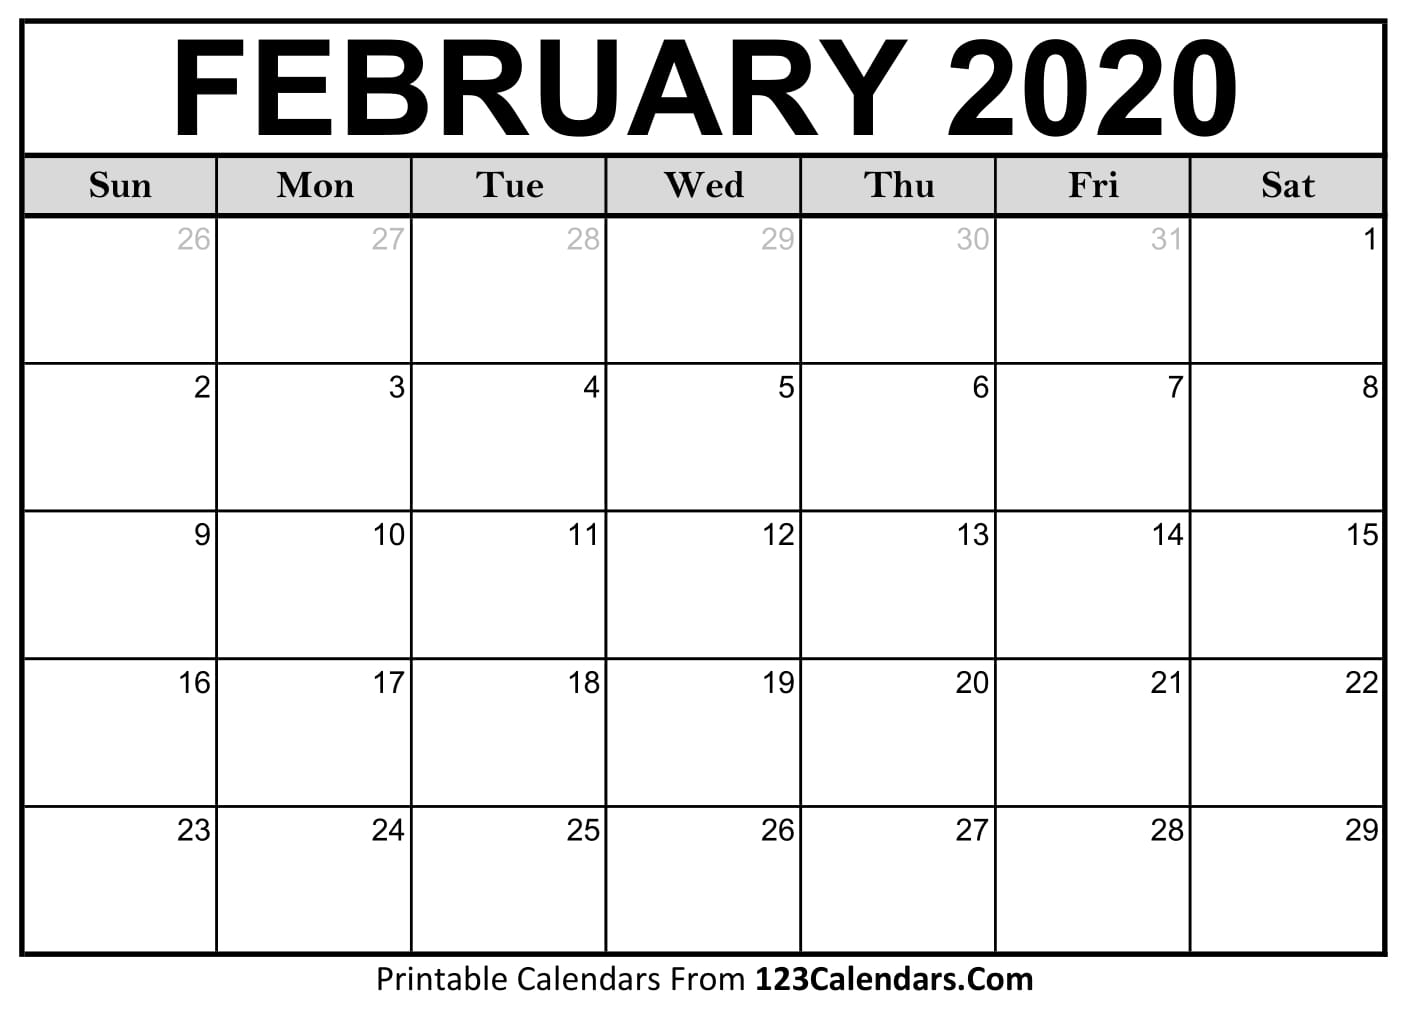 February 2020 Printable Calendar | 123Calendars